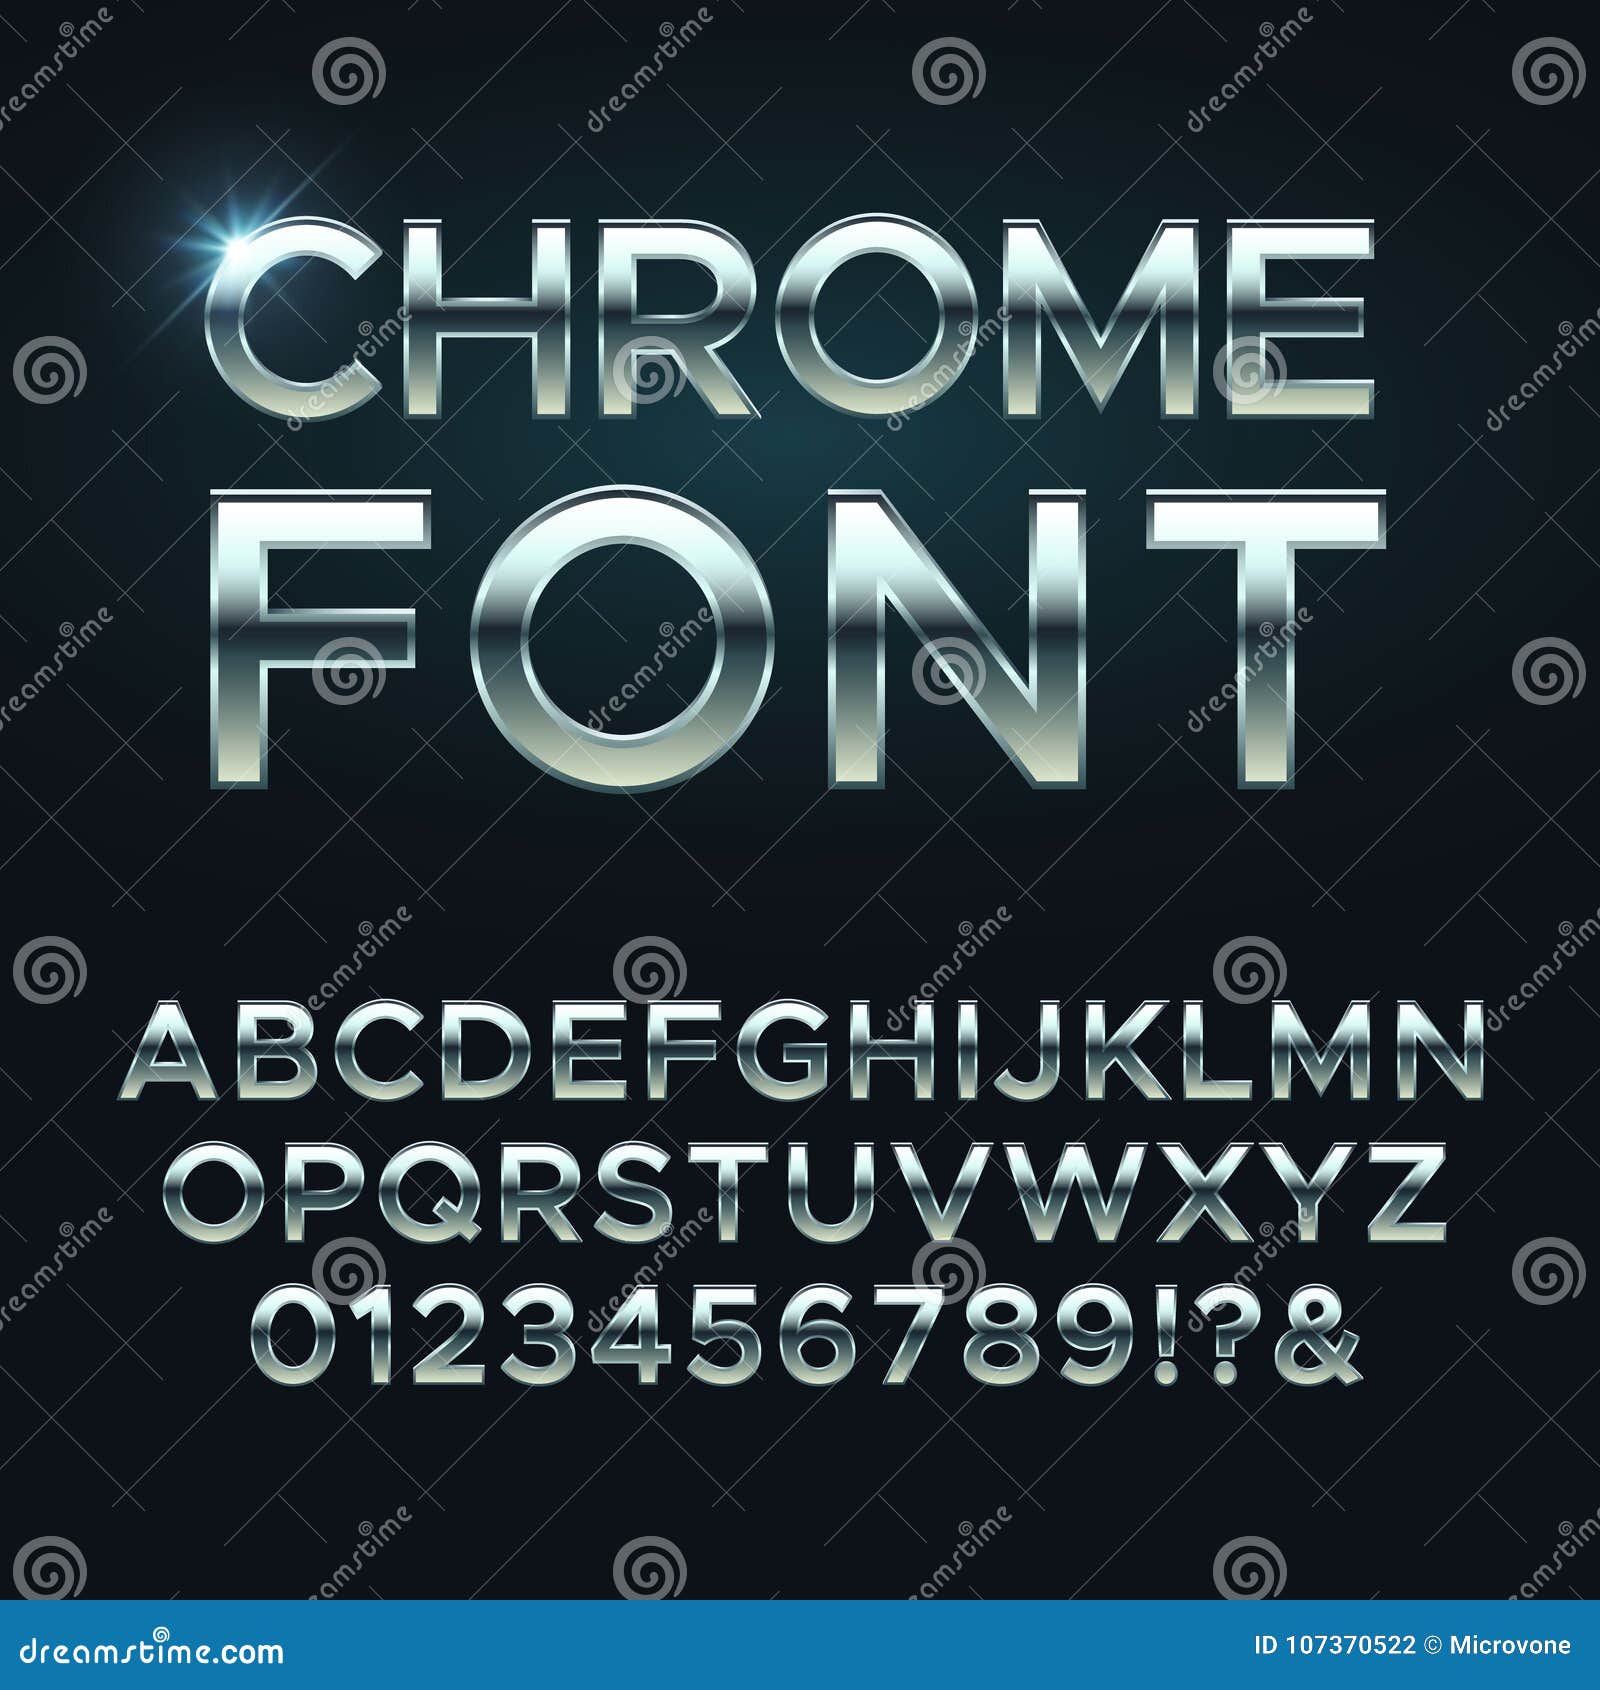 chrome metal  font. steel metallic alphabet letters